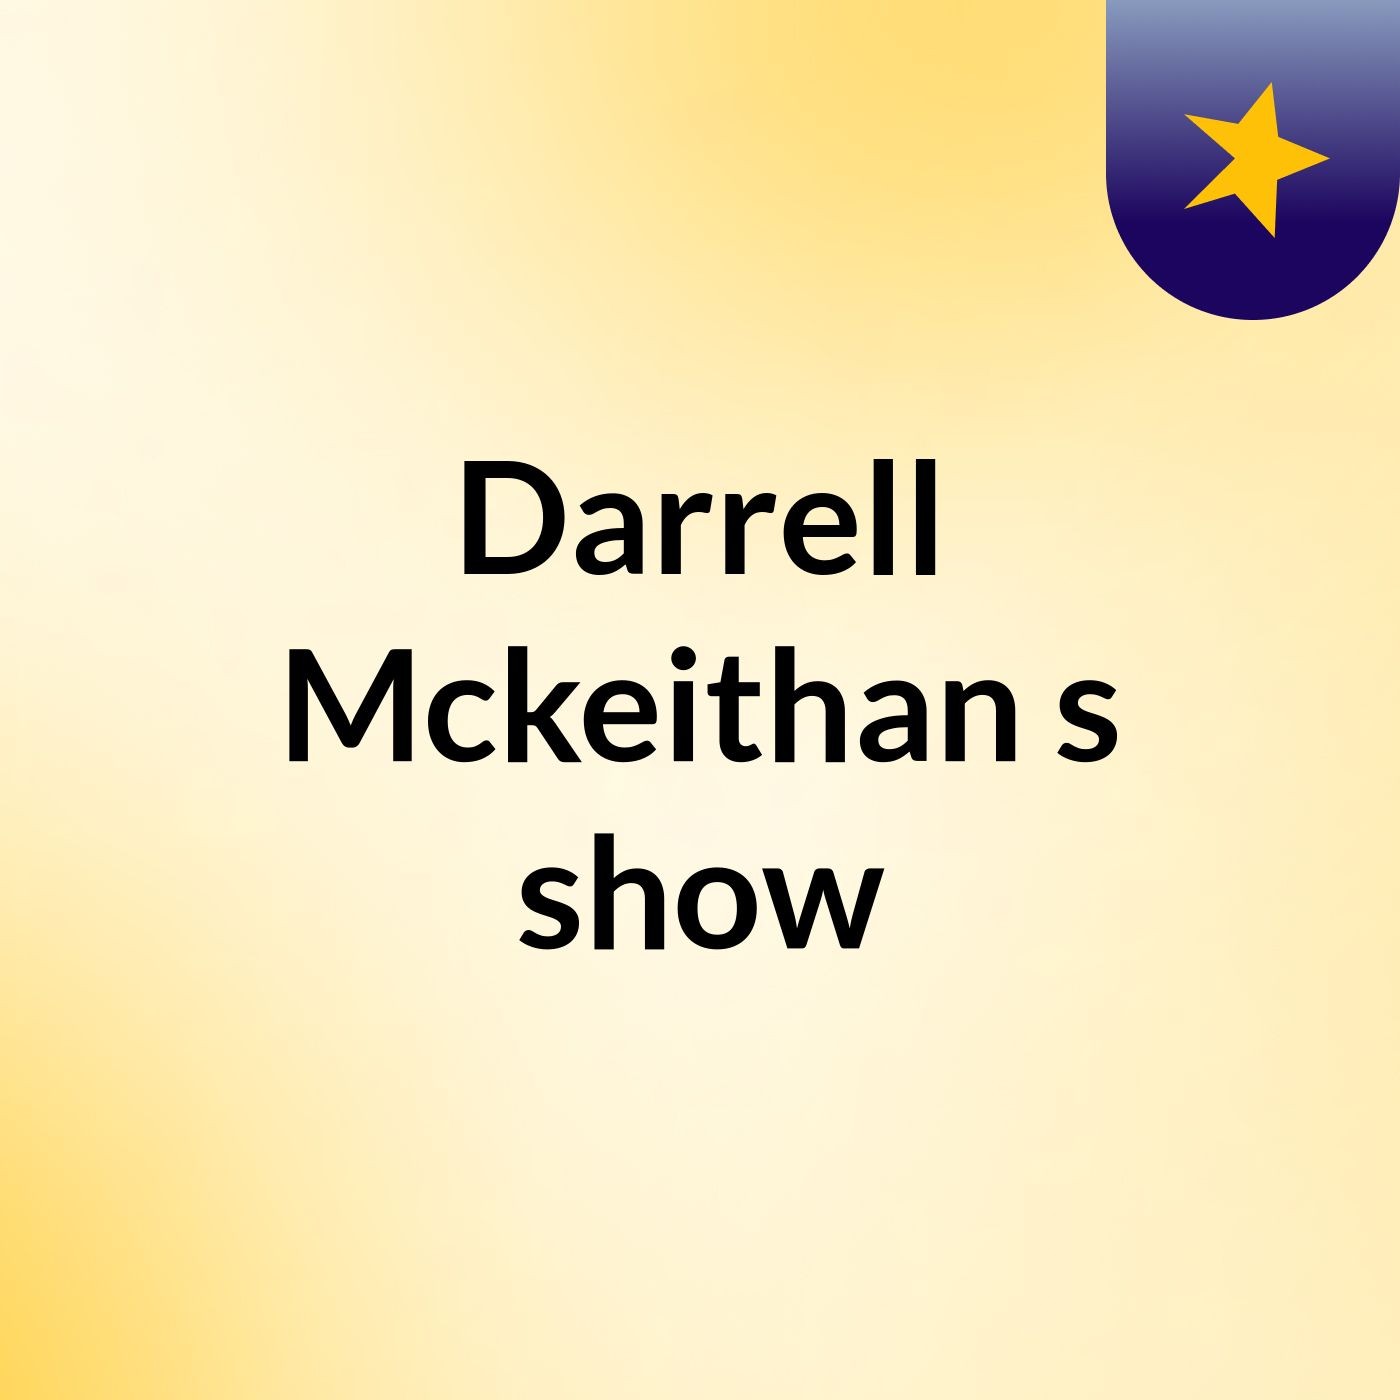 Episode 2 - Darrell Mckeithan's show